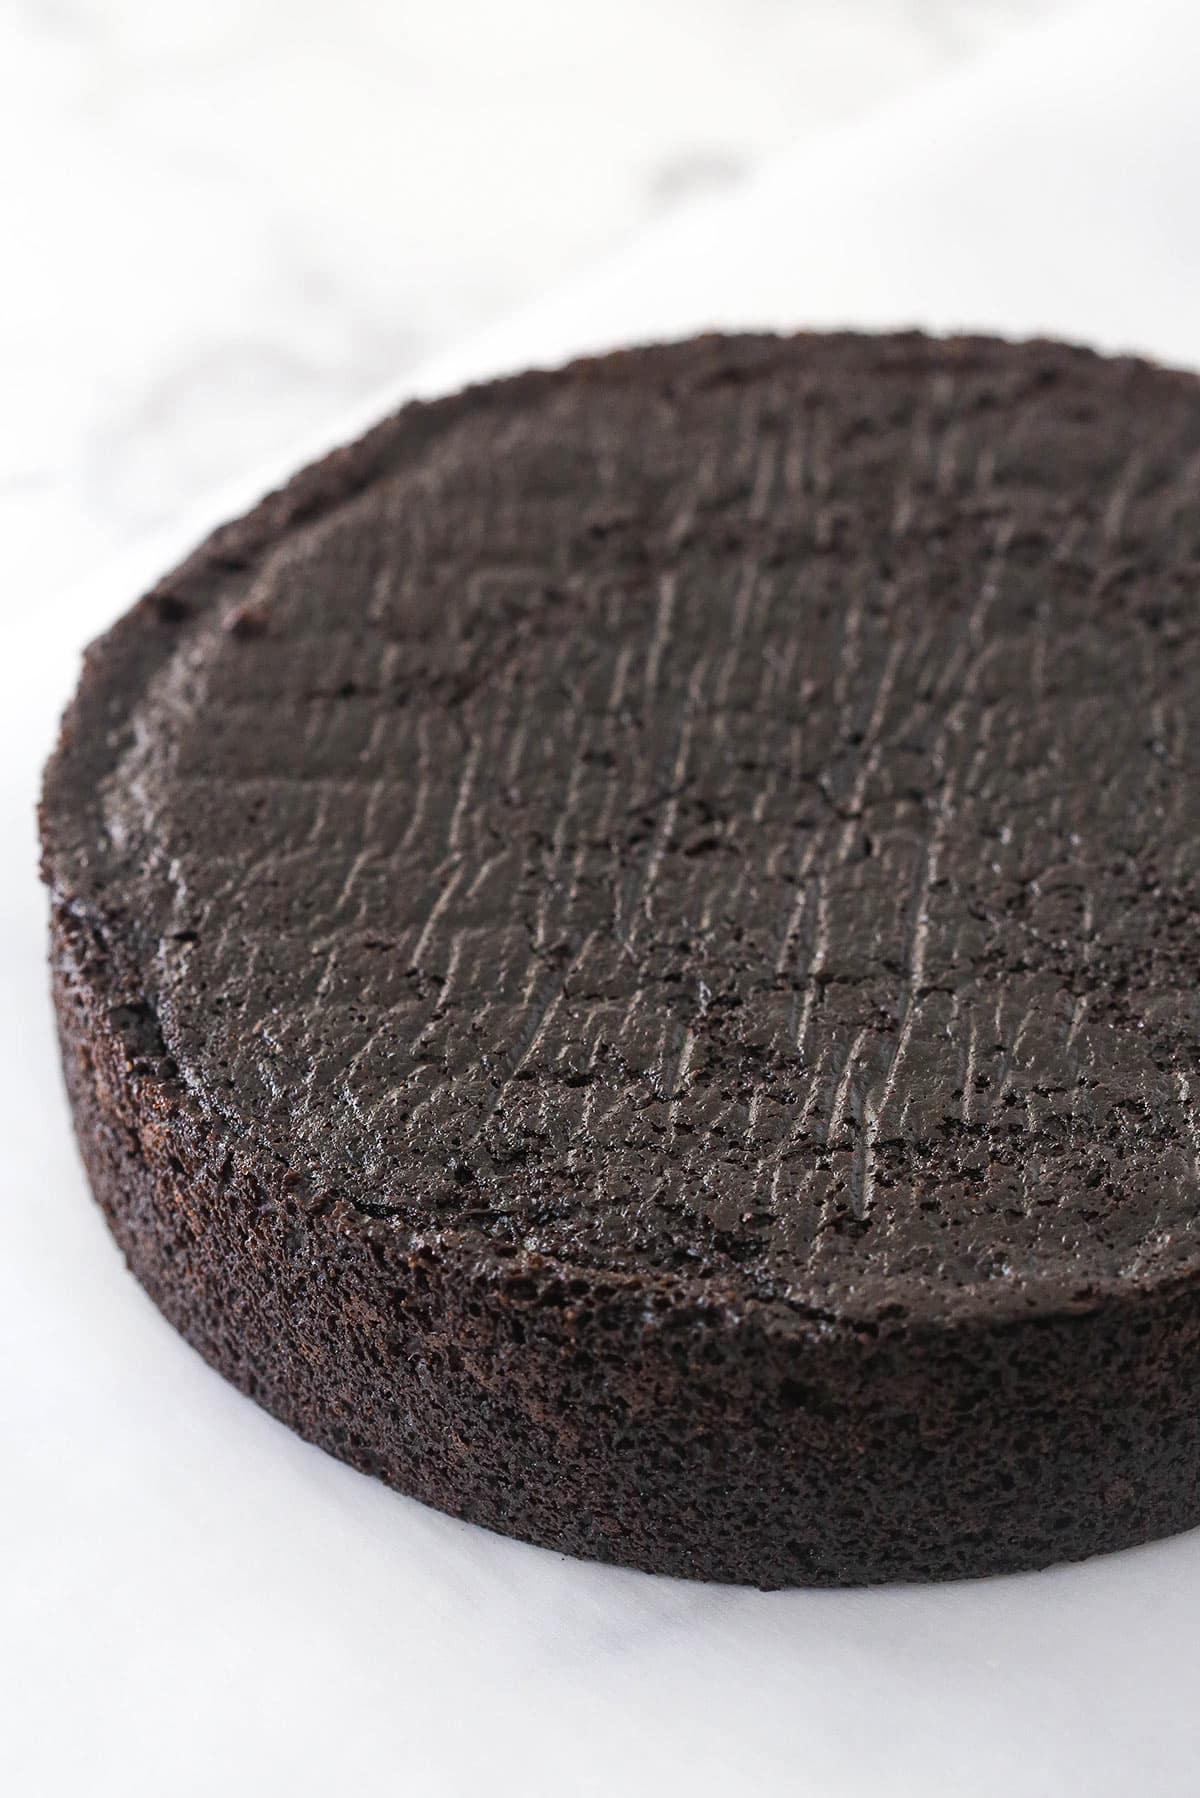 Baked chocolate cake layer.